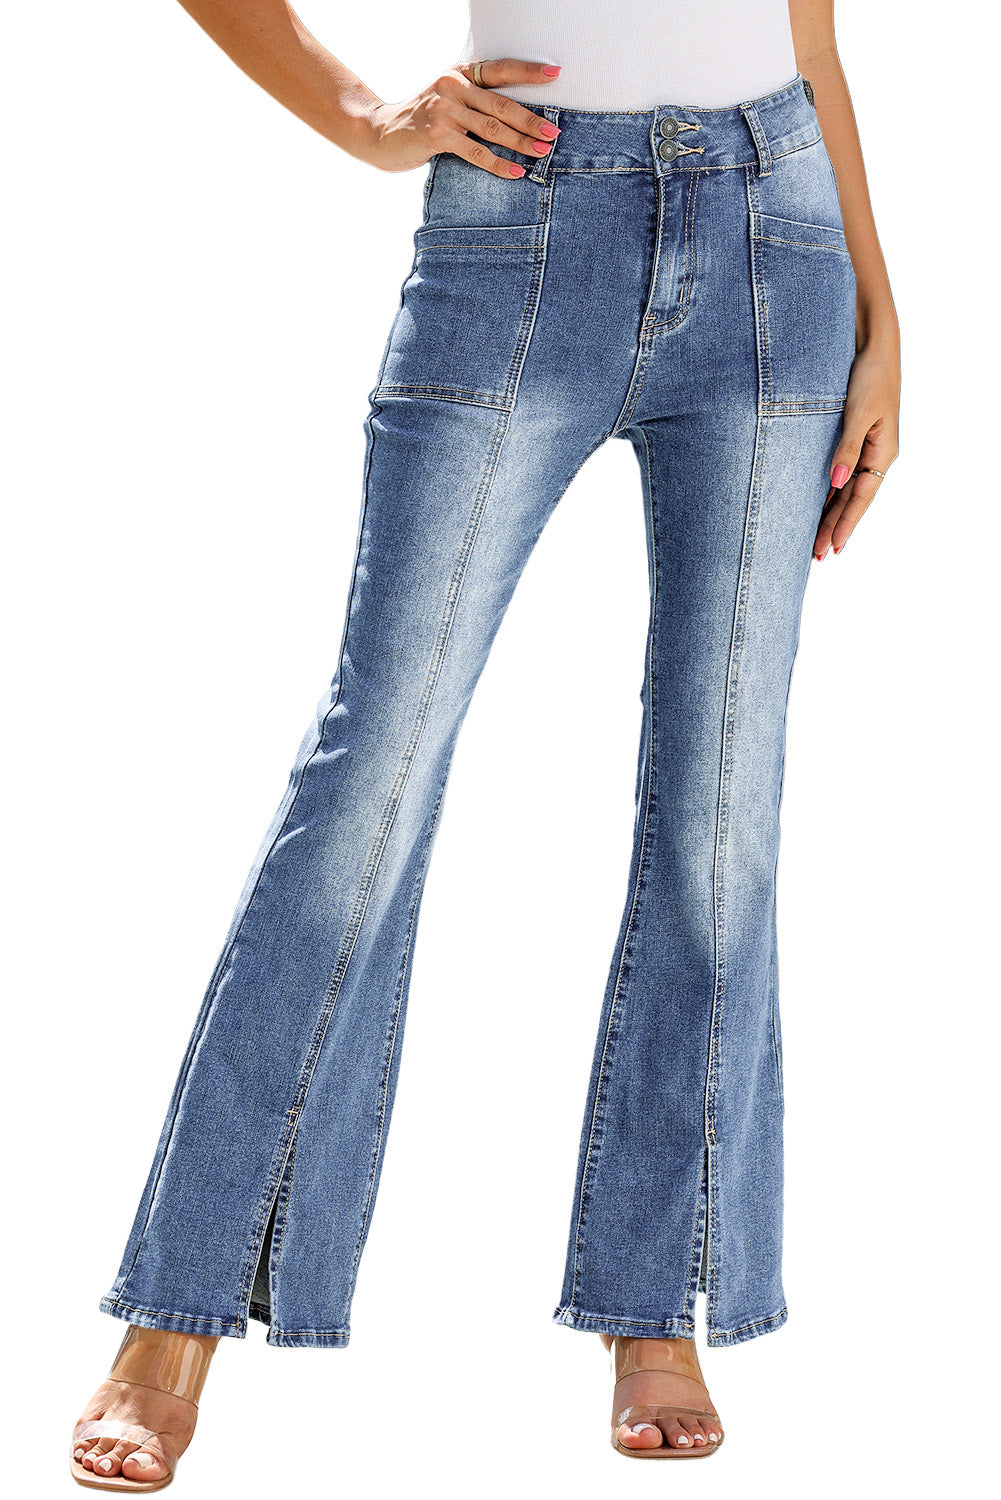 Sky Blue Exposed Seam Split Flare Jeans Jeans JT's Designer Fashion